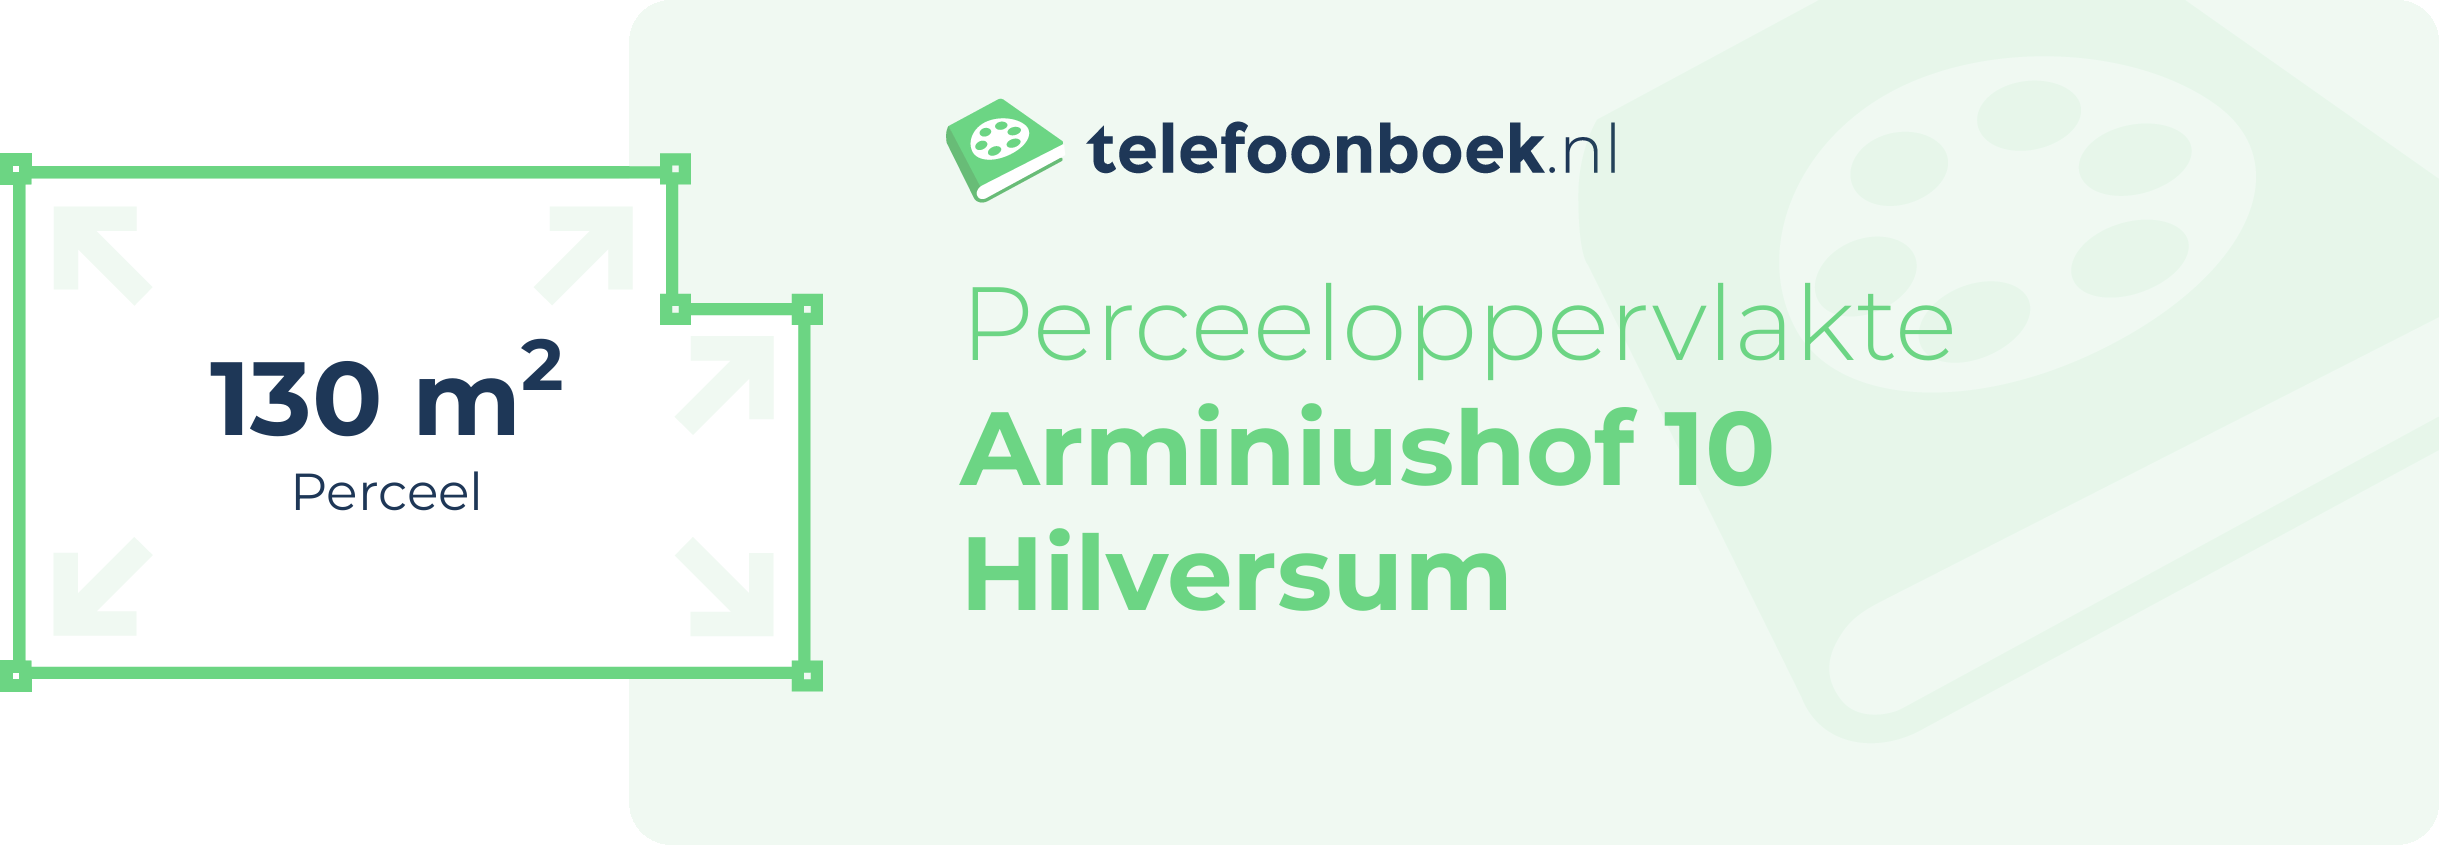 Perceeloppervlakte Arminiushof 10 Hilversum